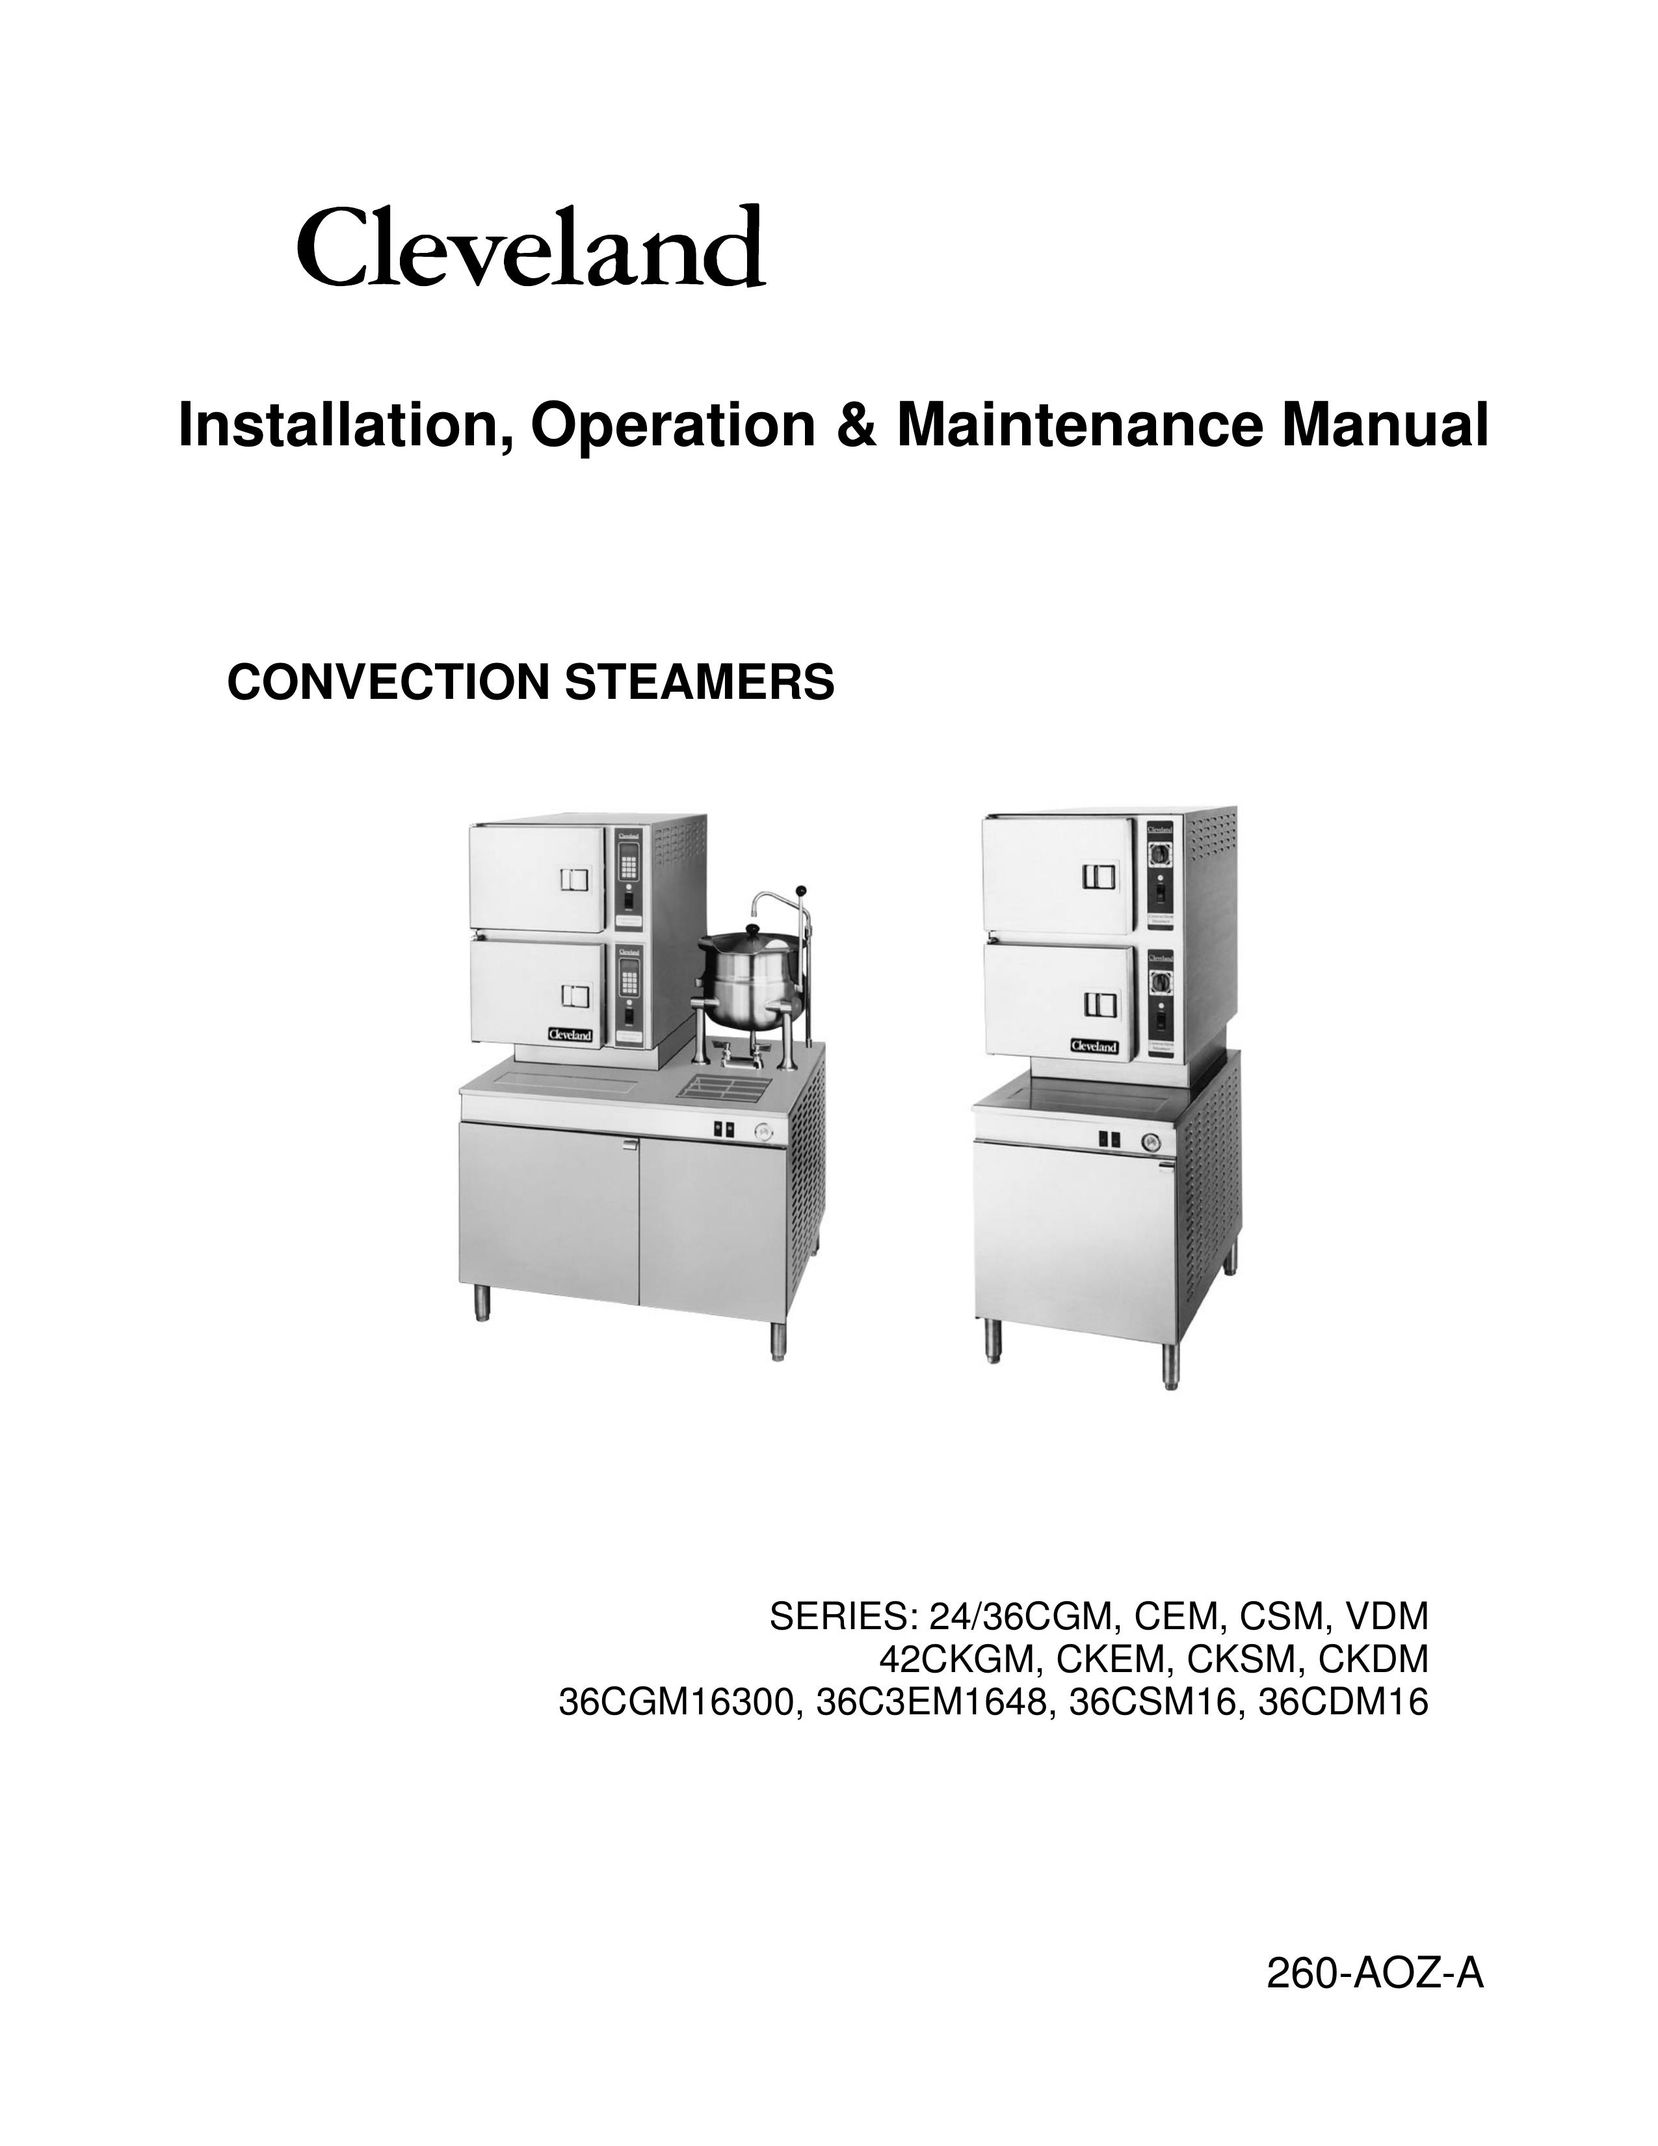 Cleveland Range 24/36CGM Electric Steamer User Manual